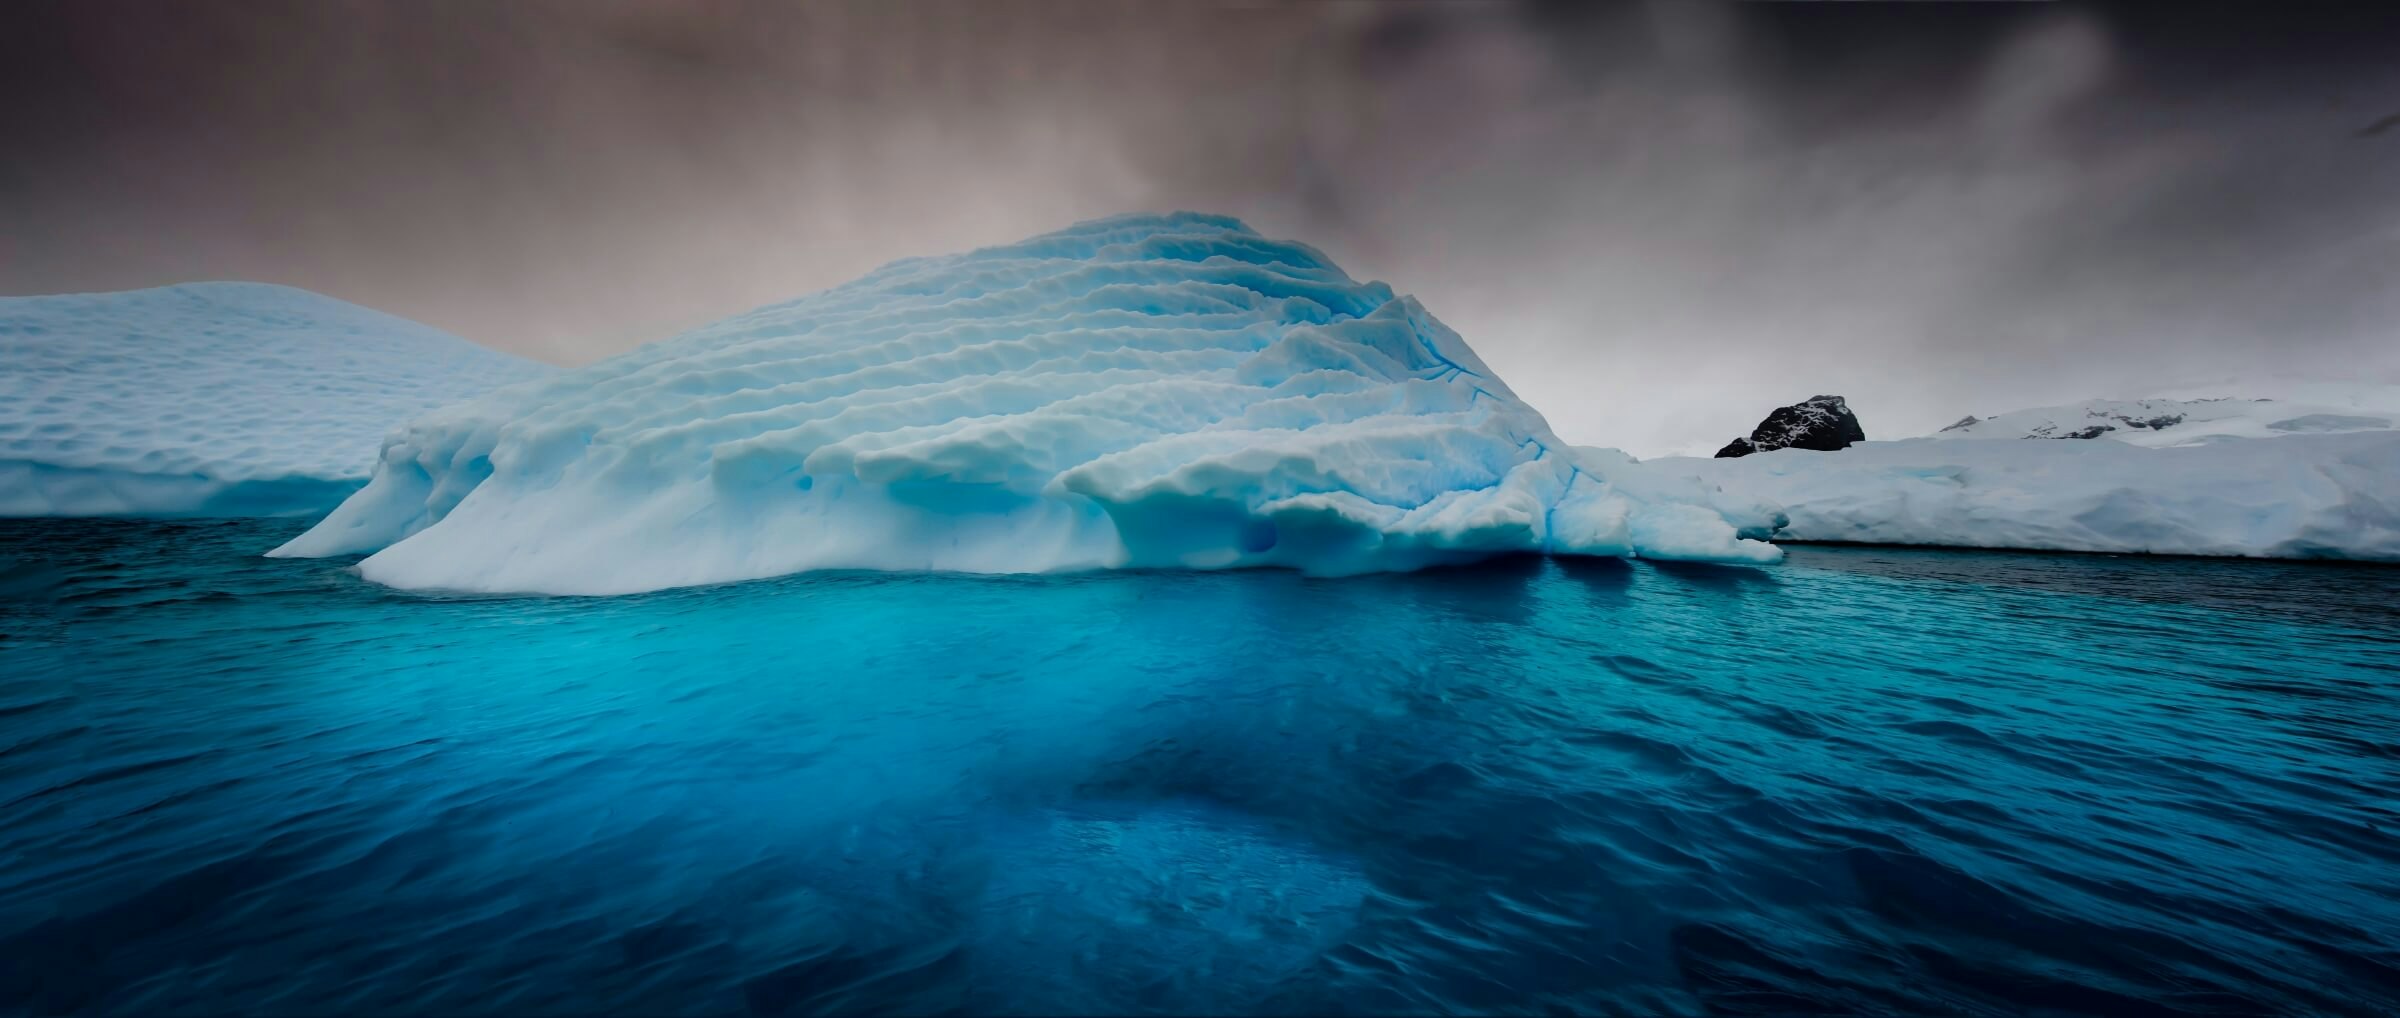 Travel News - flat earth cruise ice wall